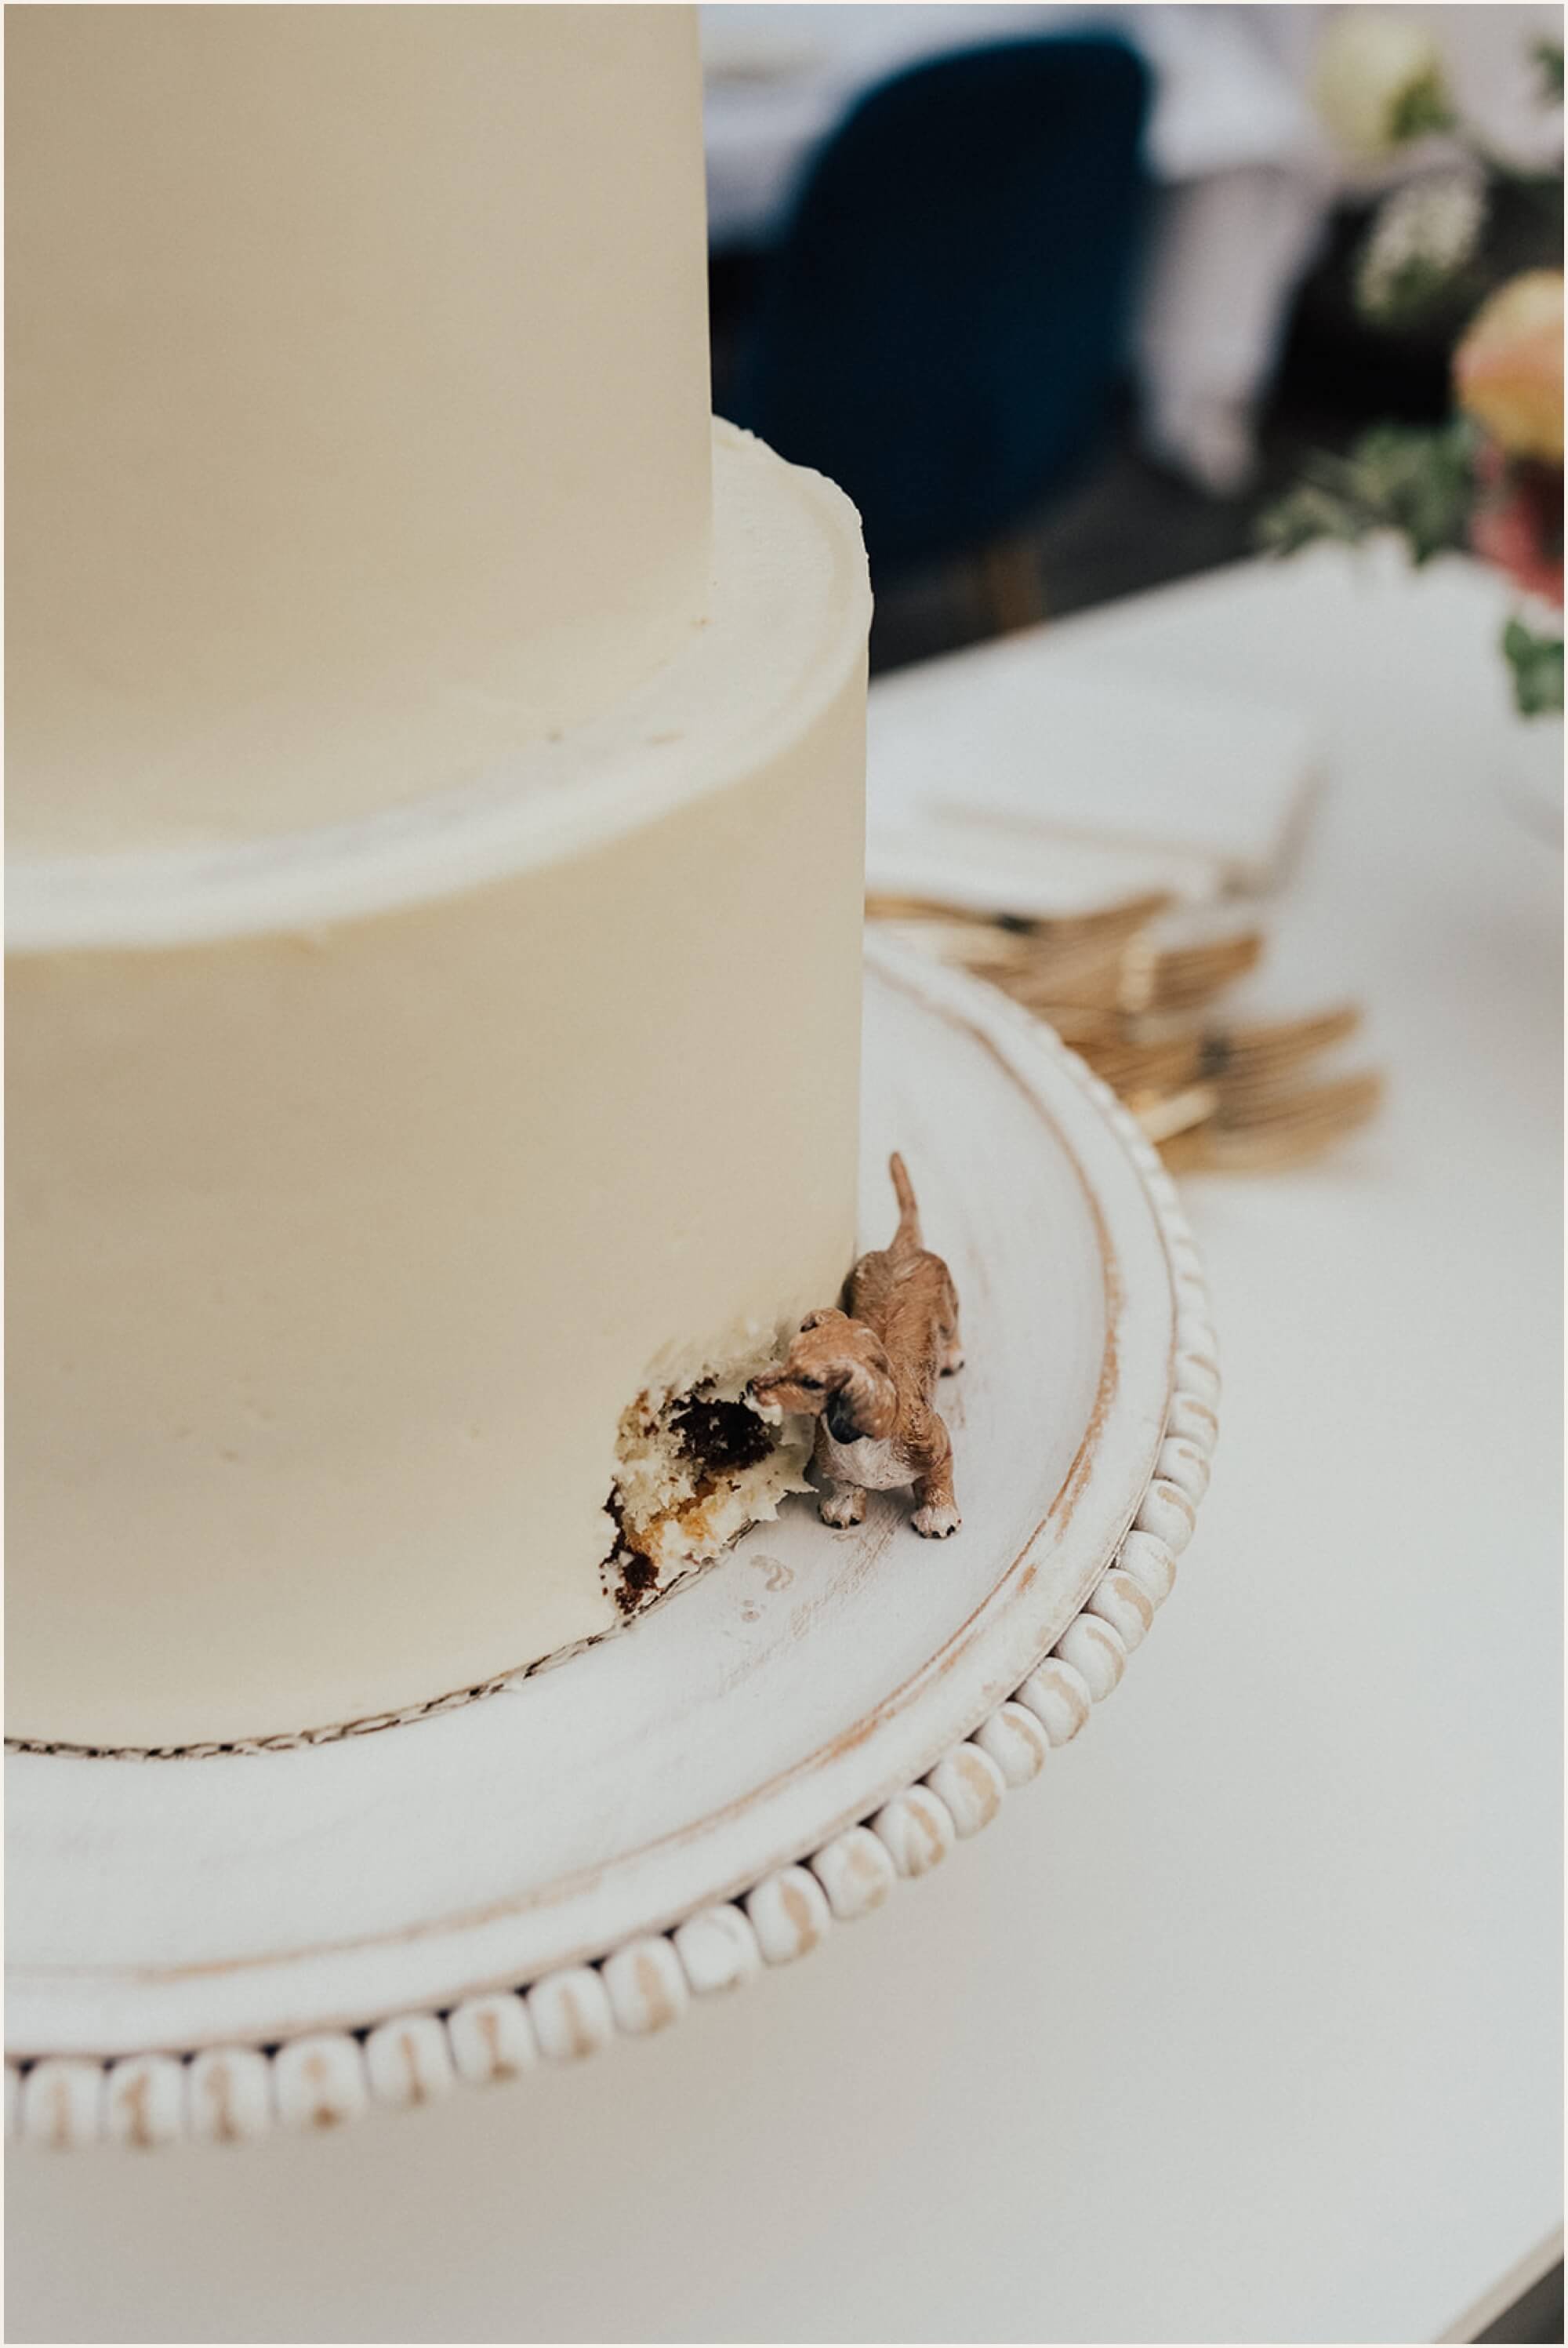 Dog taking bite out of wedding cake